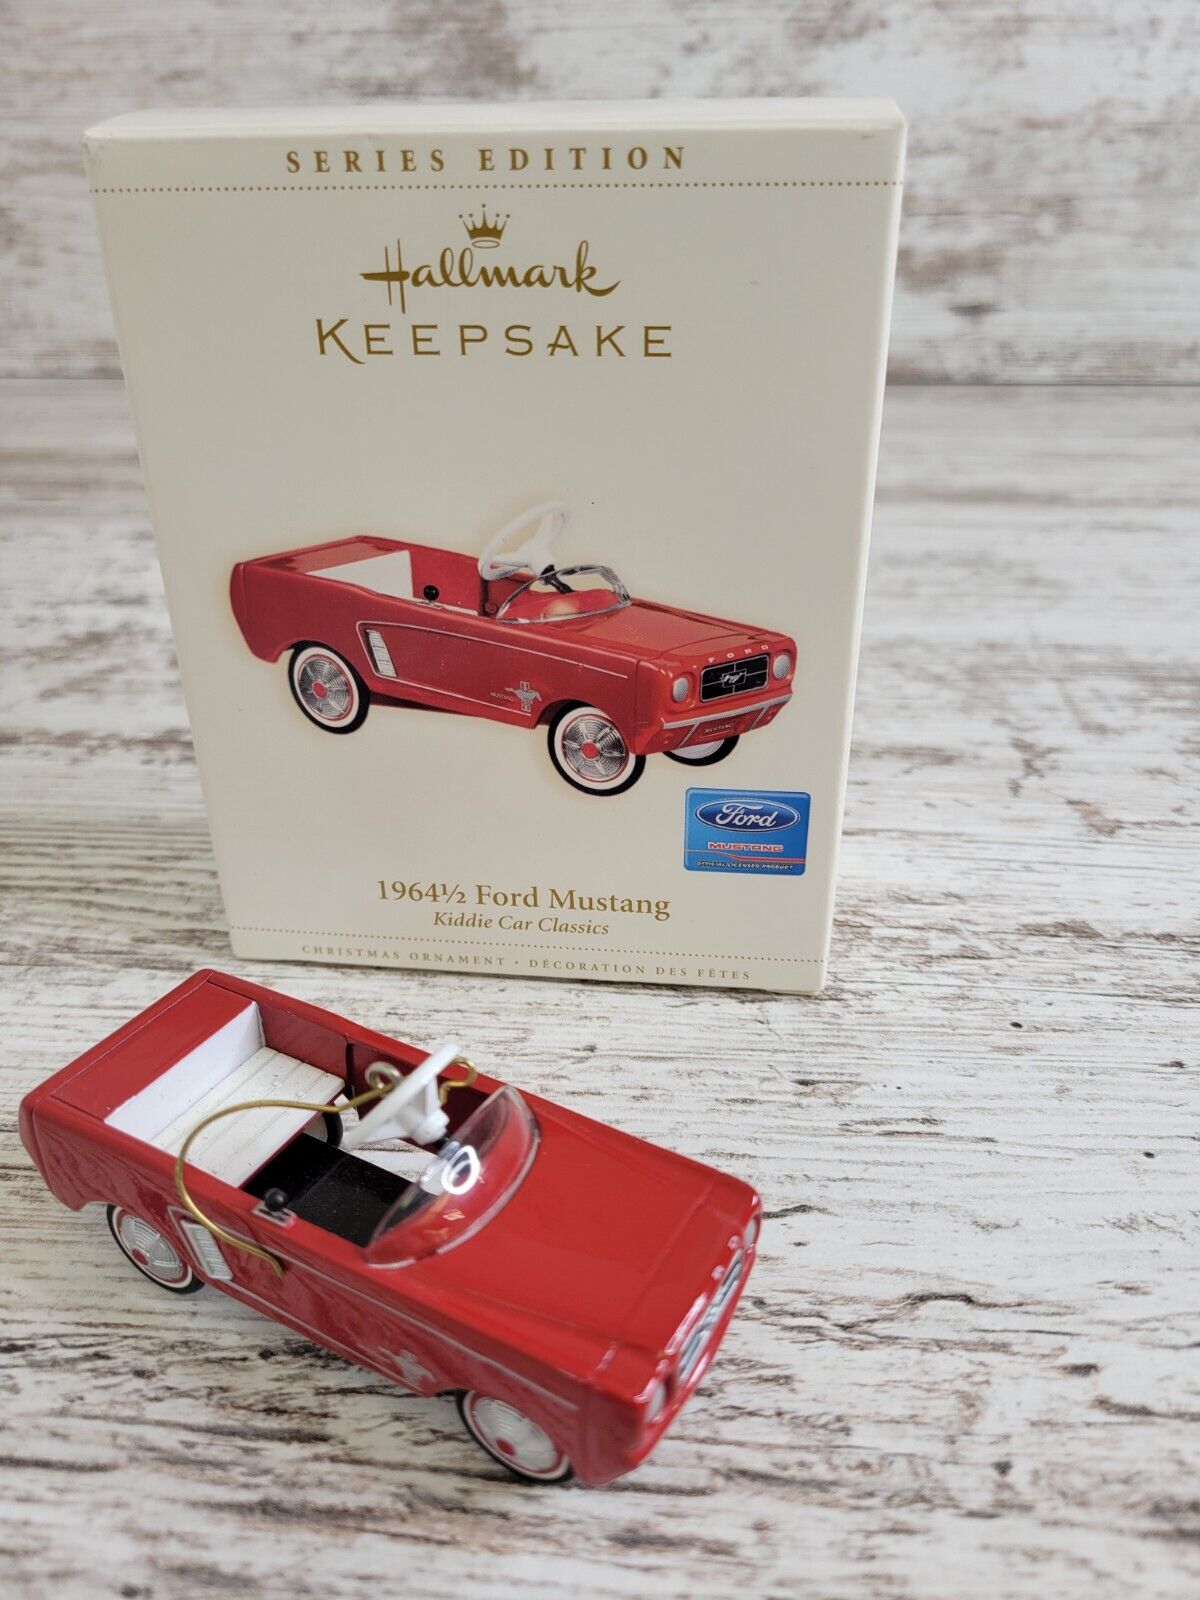 2006 Hallmark Keepsake Ornament 1964 1/2 Ford Mustang Kiddie Car Classics NIB